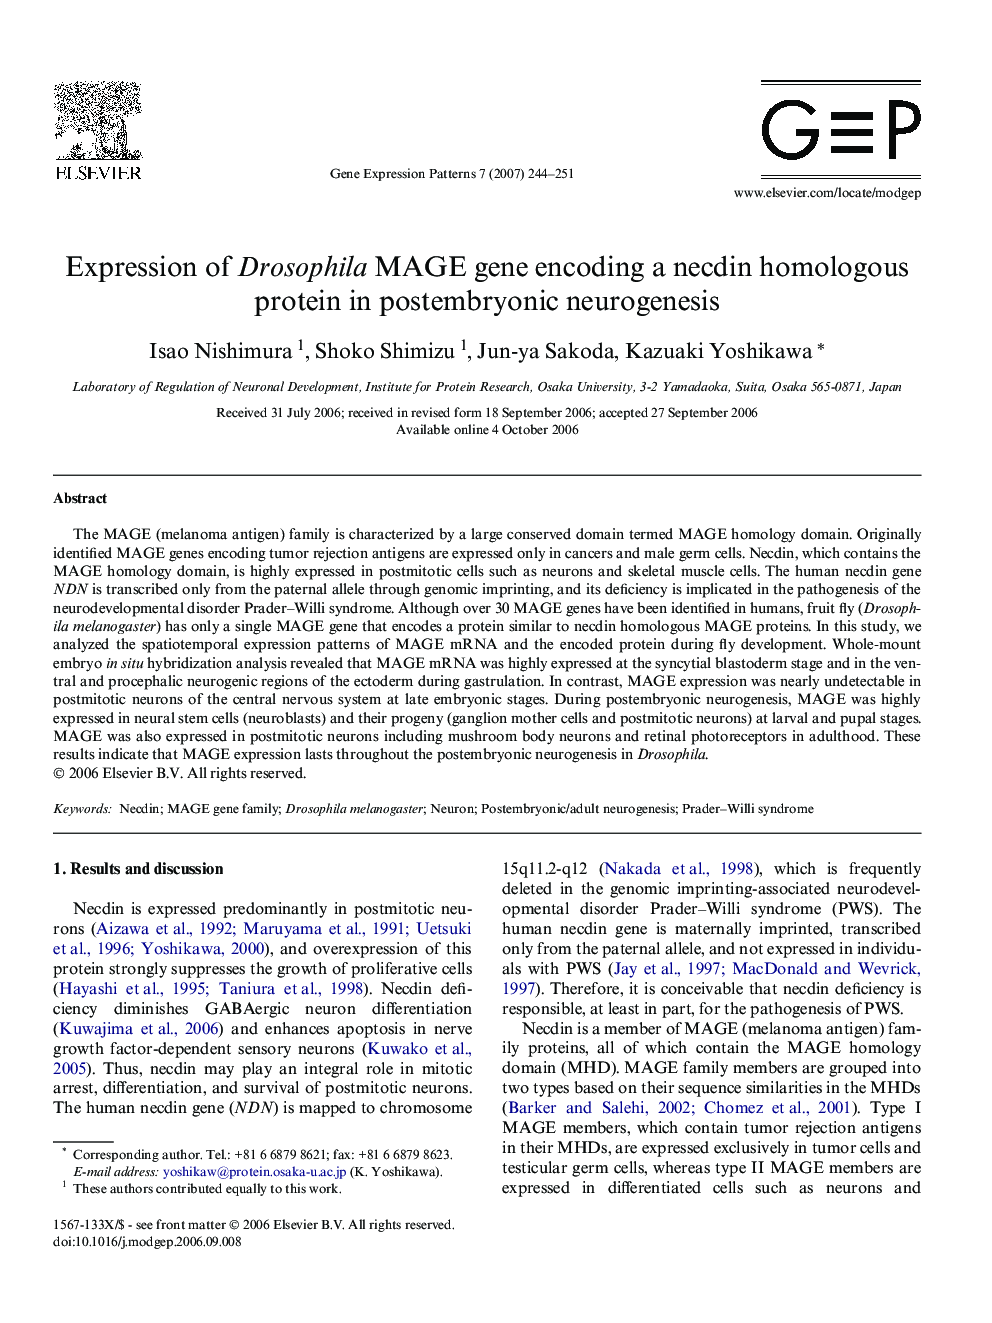 Expression of Drosophila MAGE gene encoding a necdin homologous protein in postembryonic neurogenesis